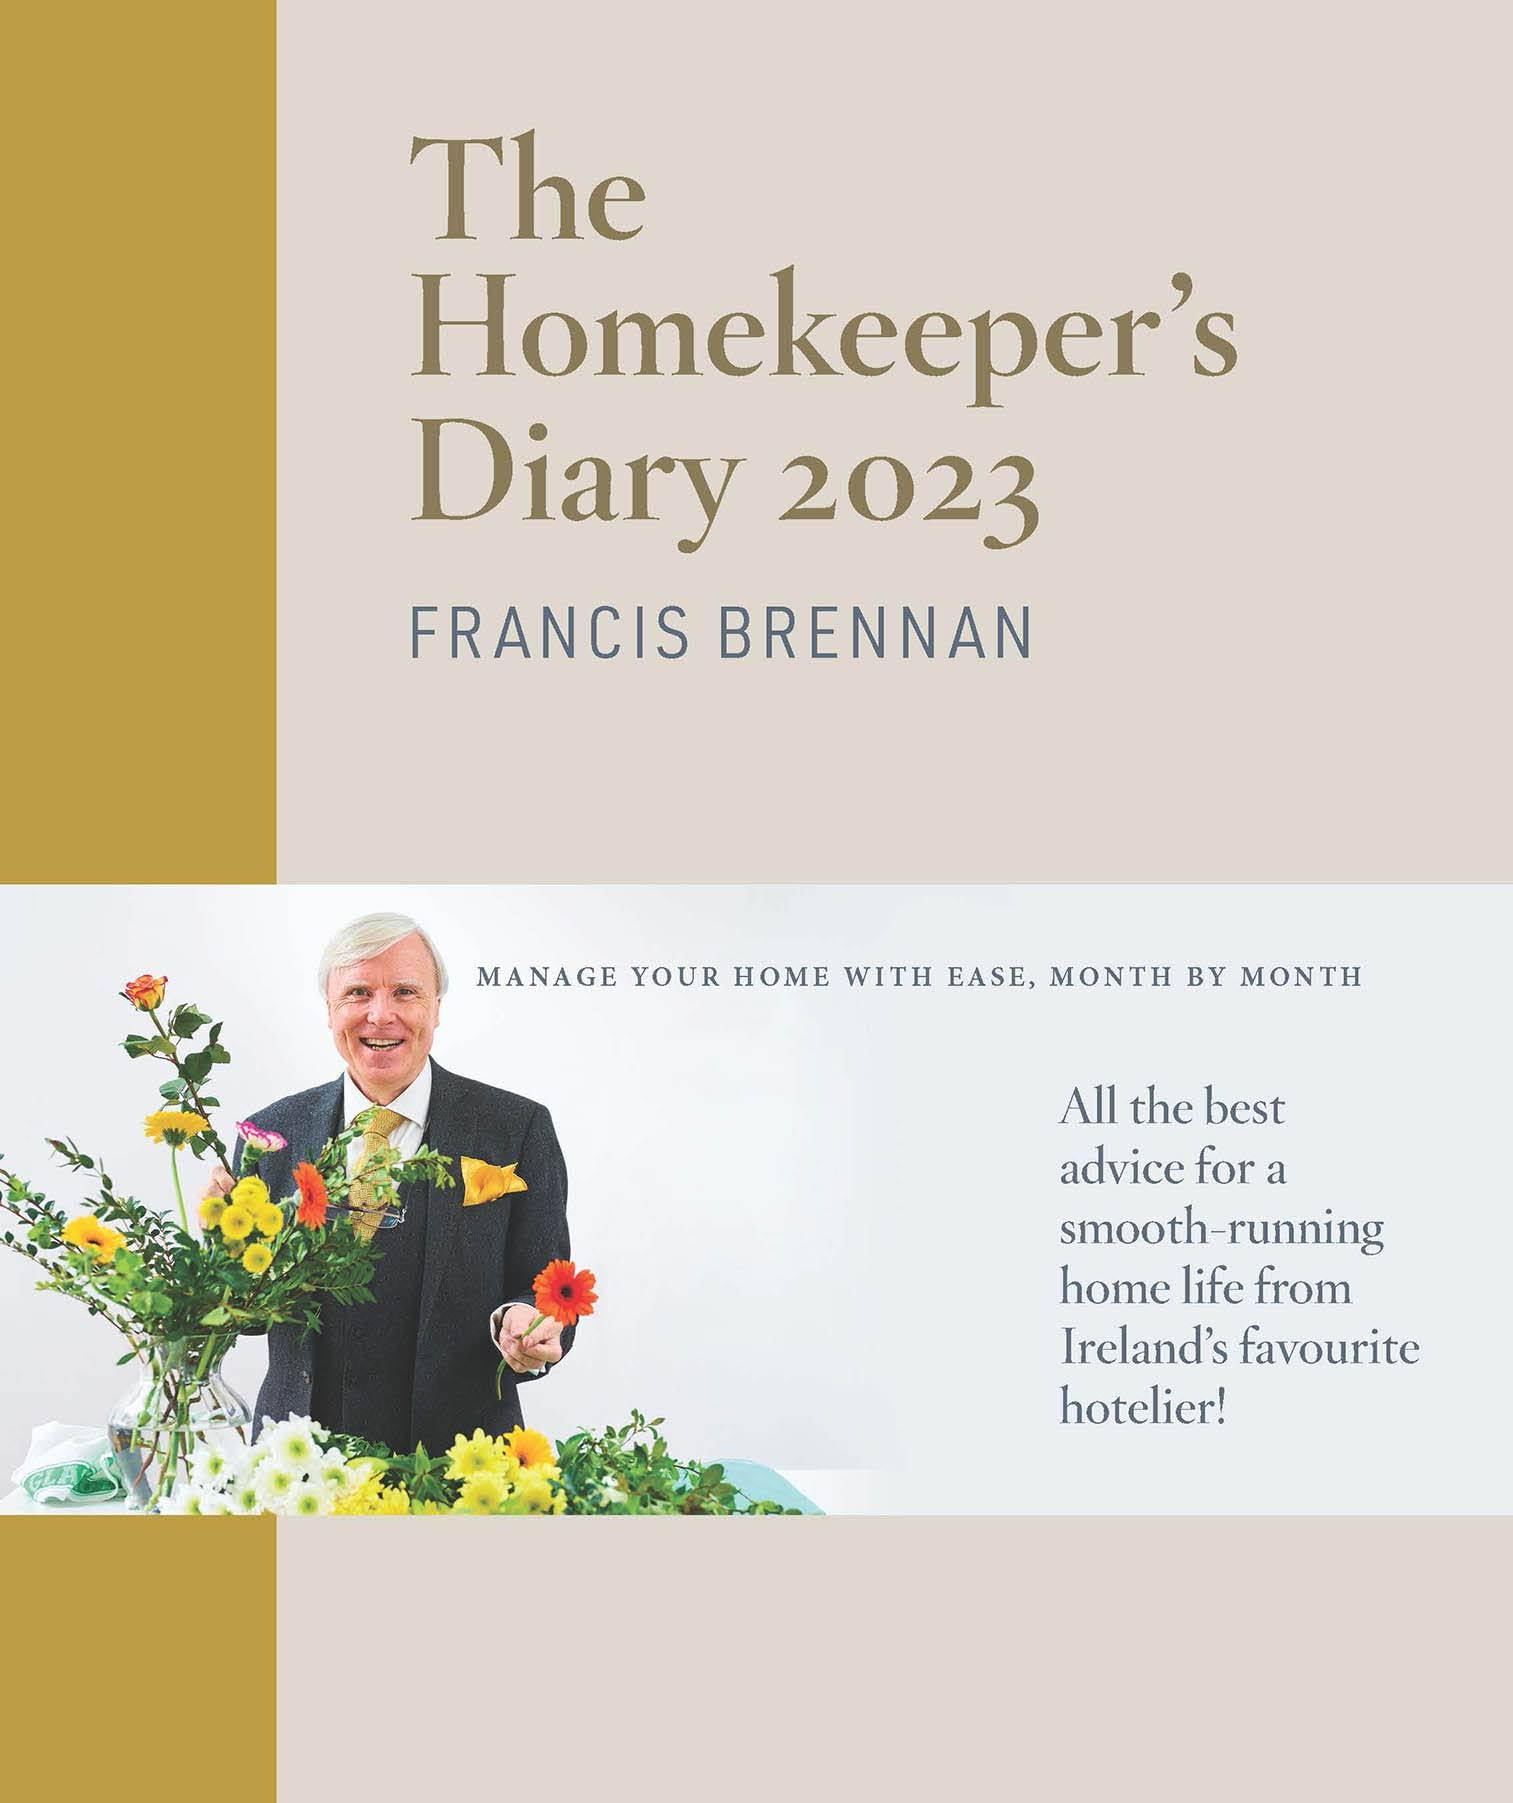 The Homekeeper's Diary 2023 by Francis Brennan